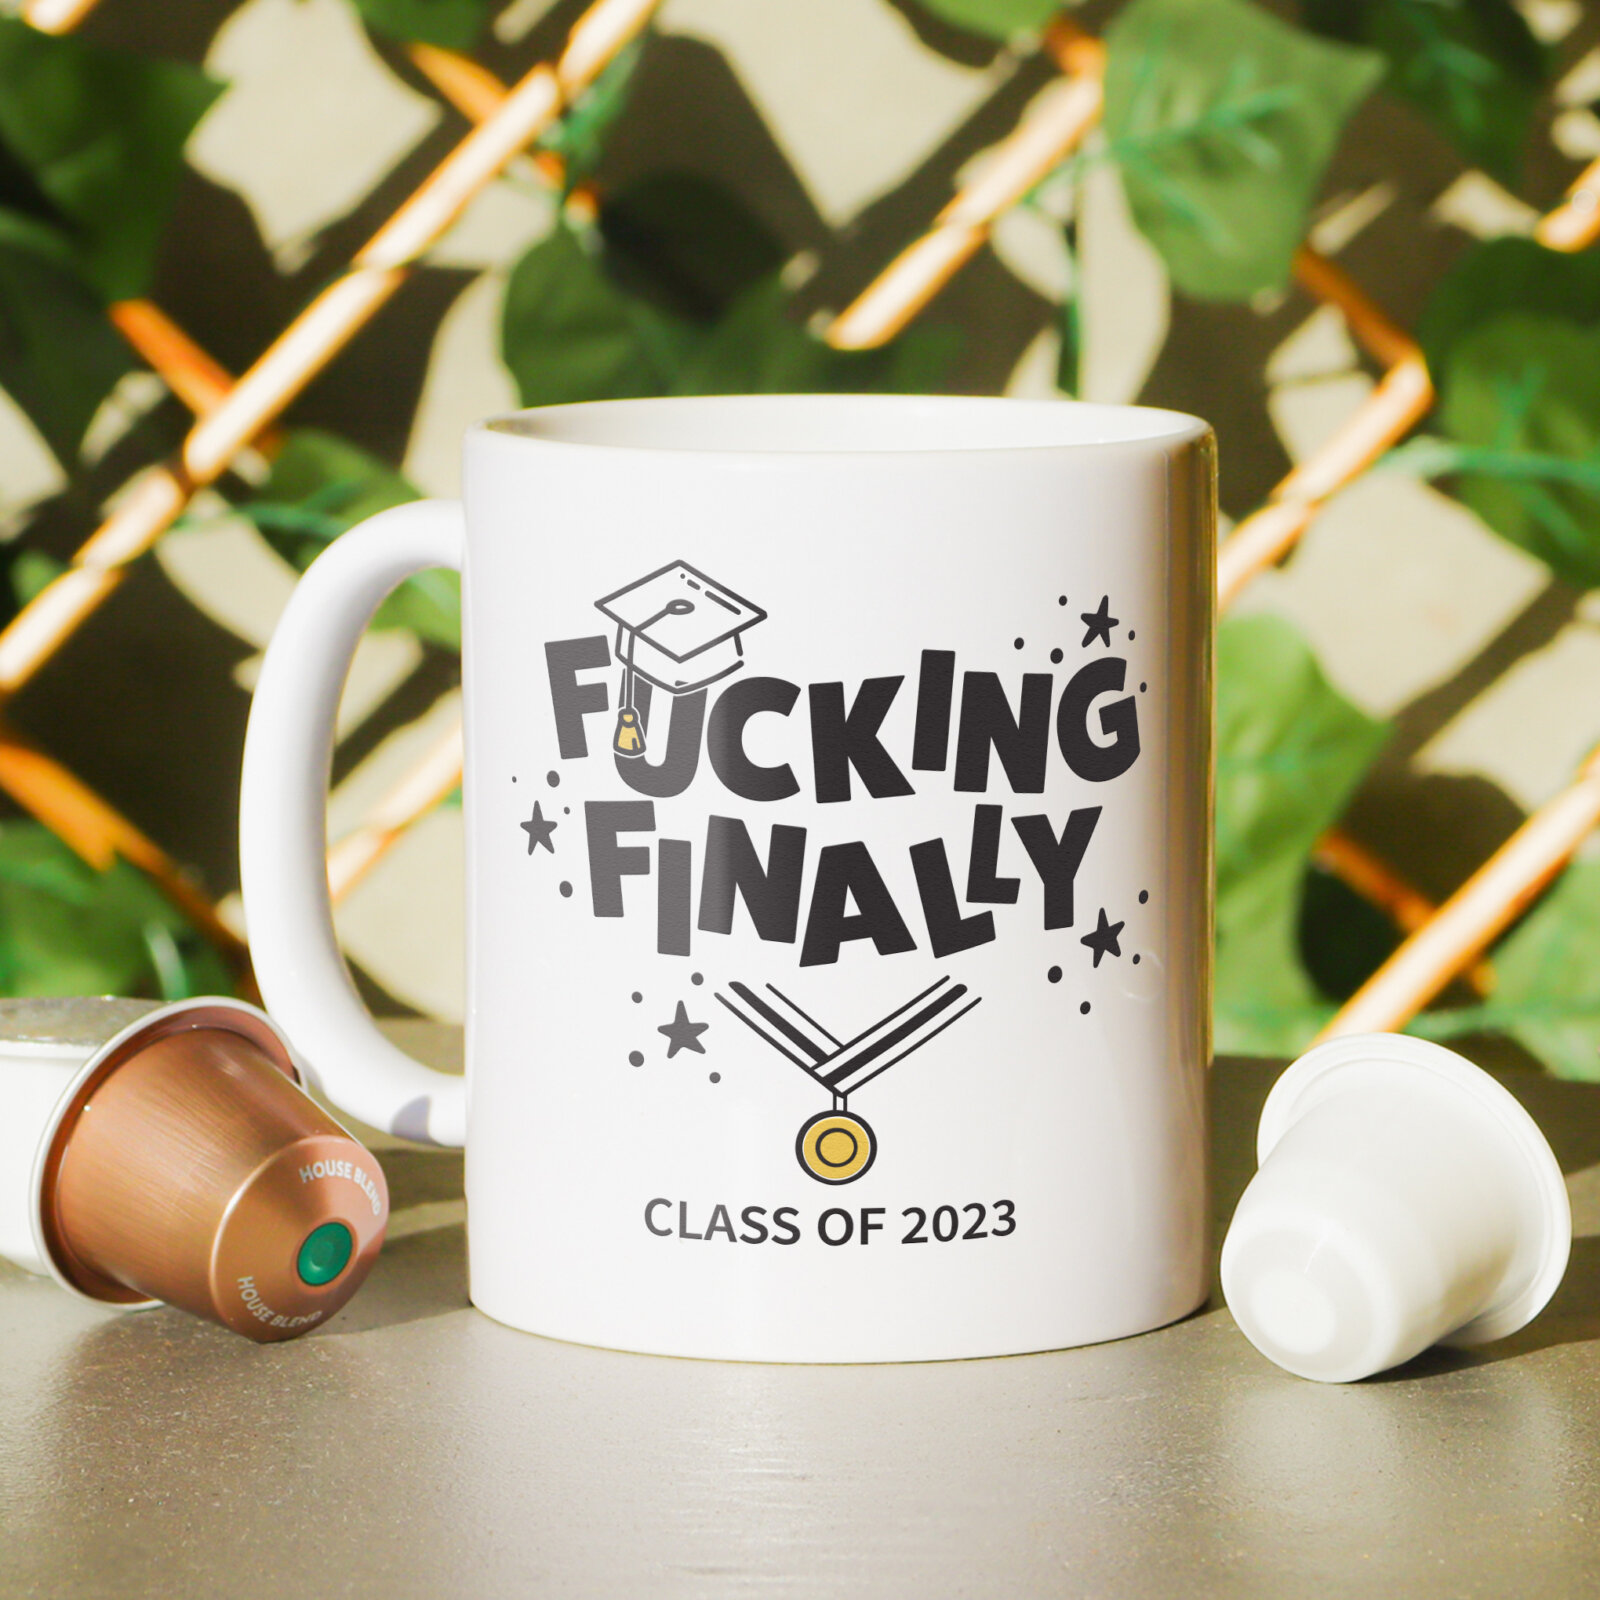 Fucking finally graduation coffee mug